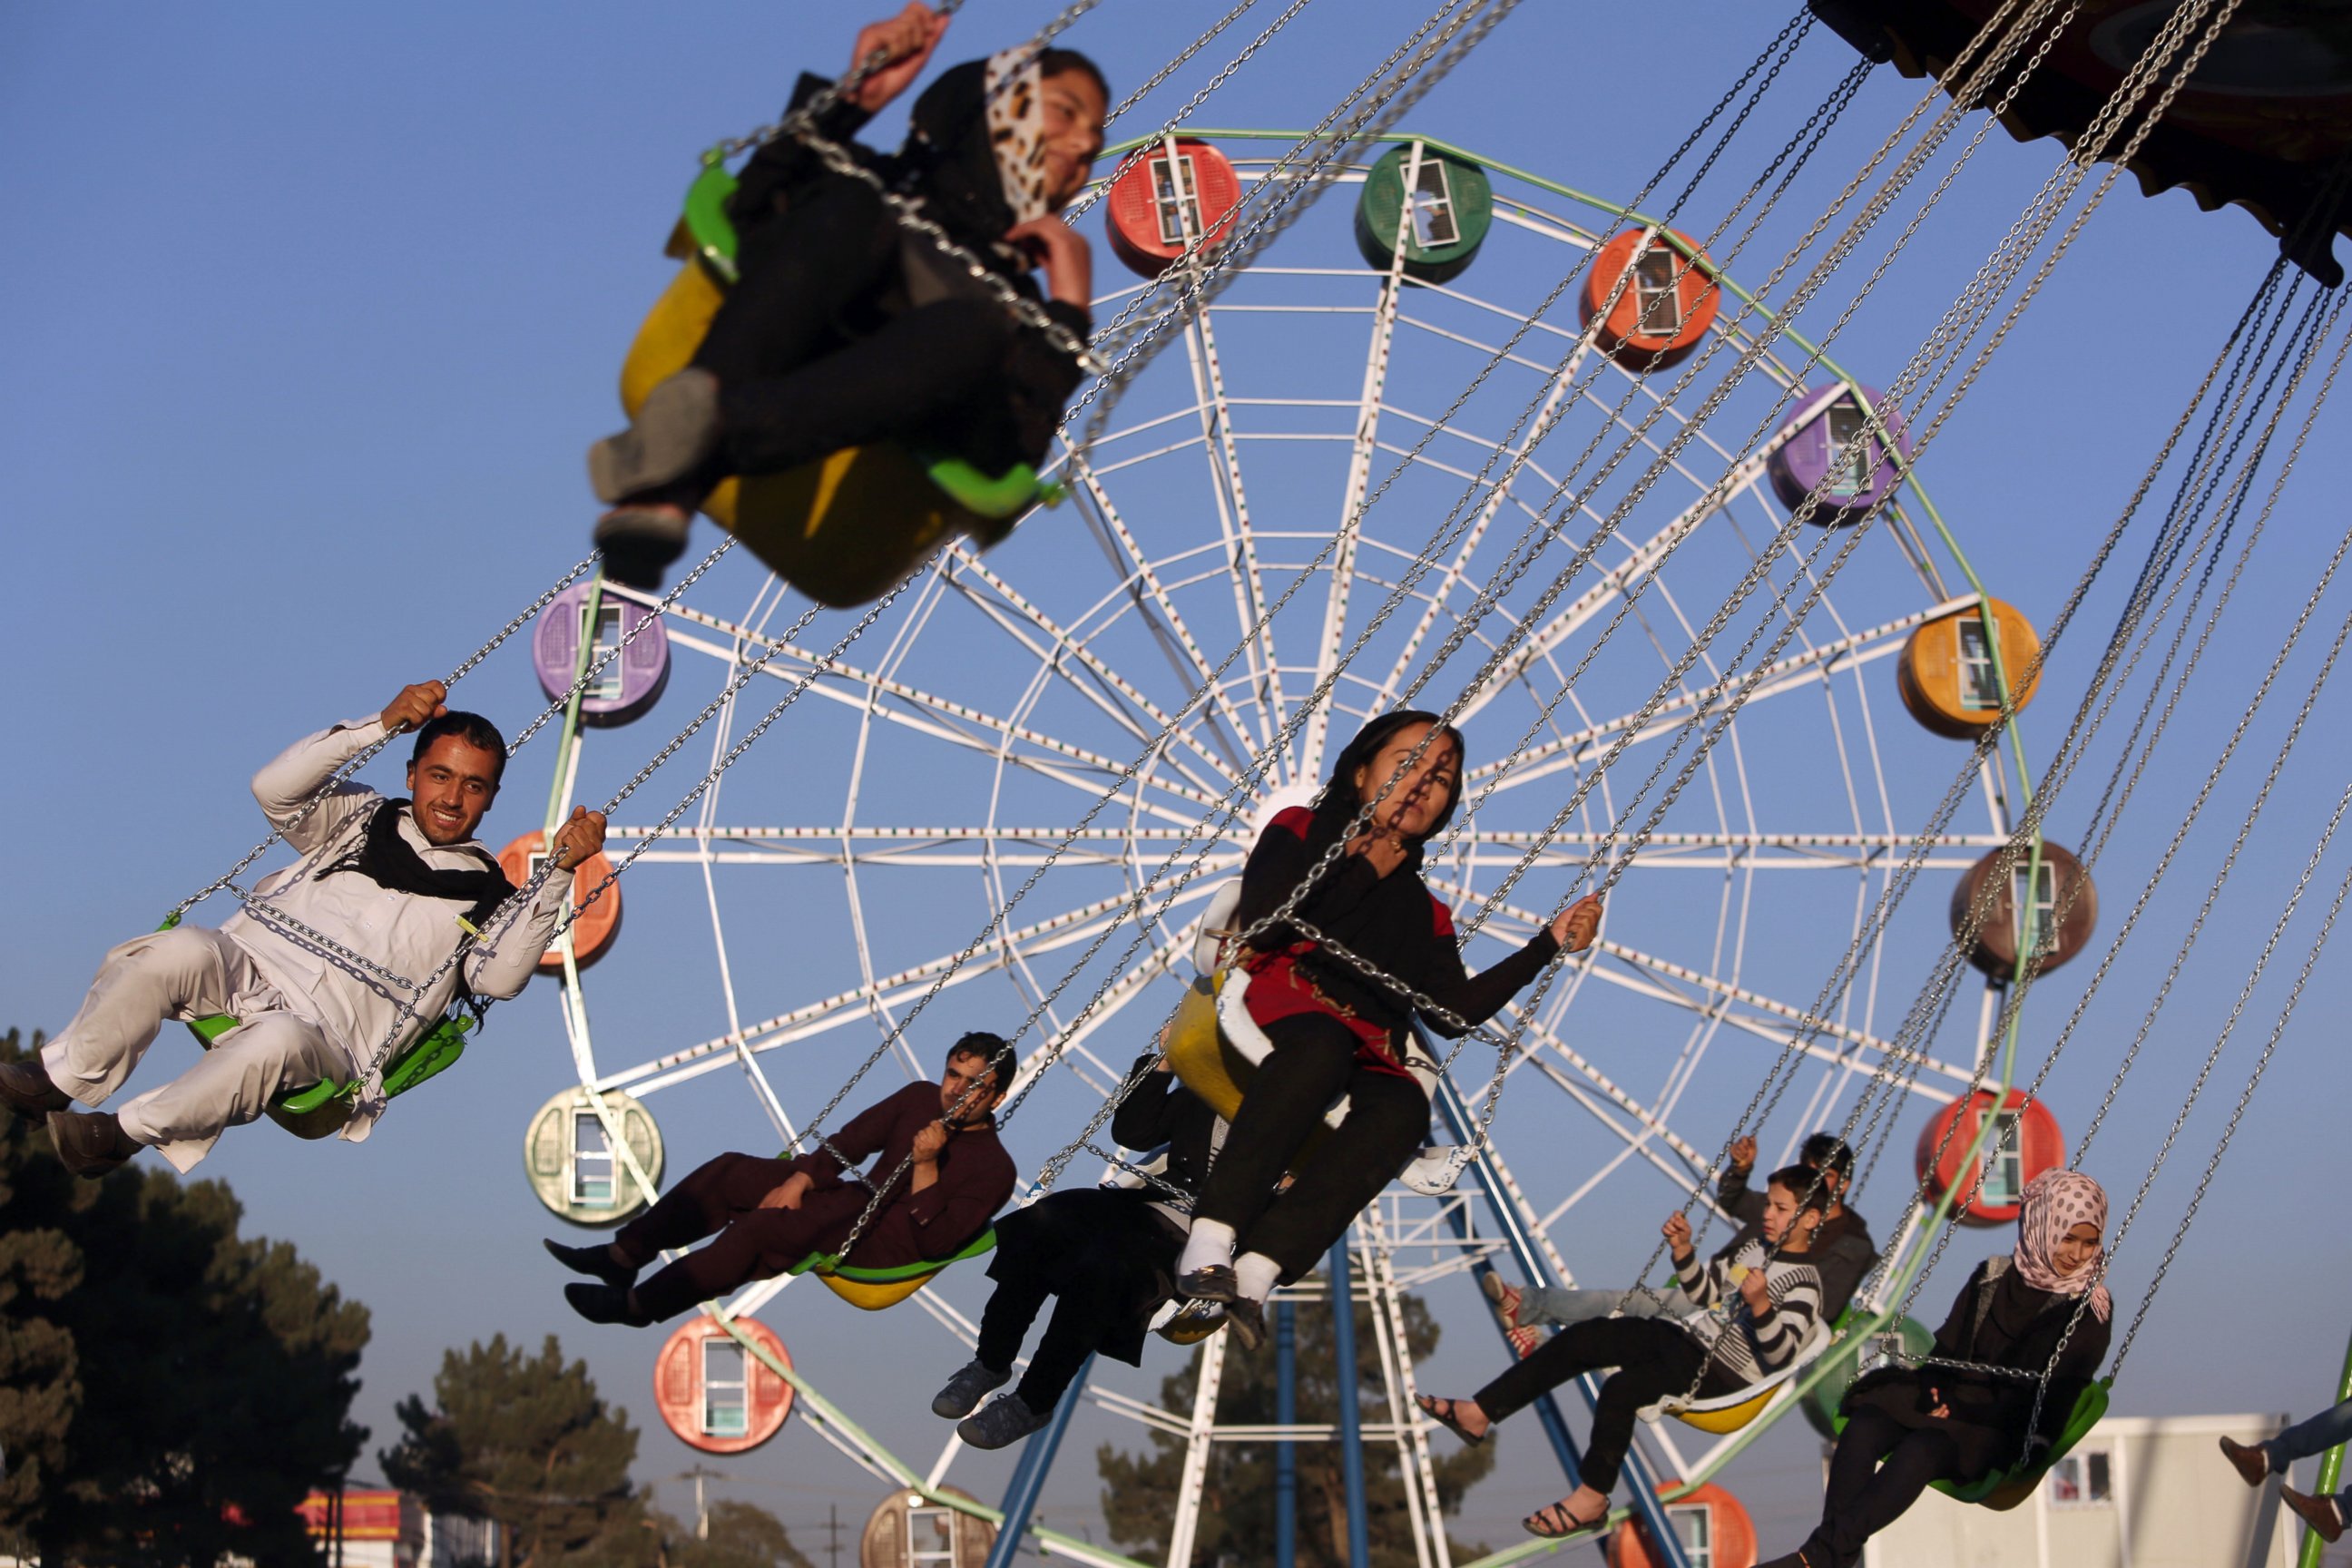 PHOTO: Kabul's First Amusement Park